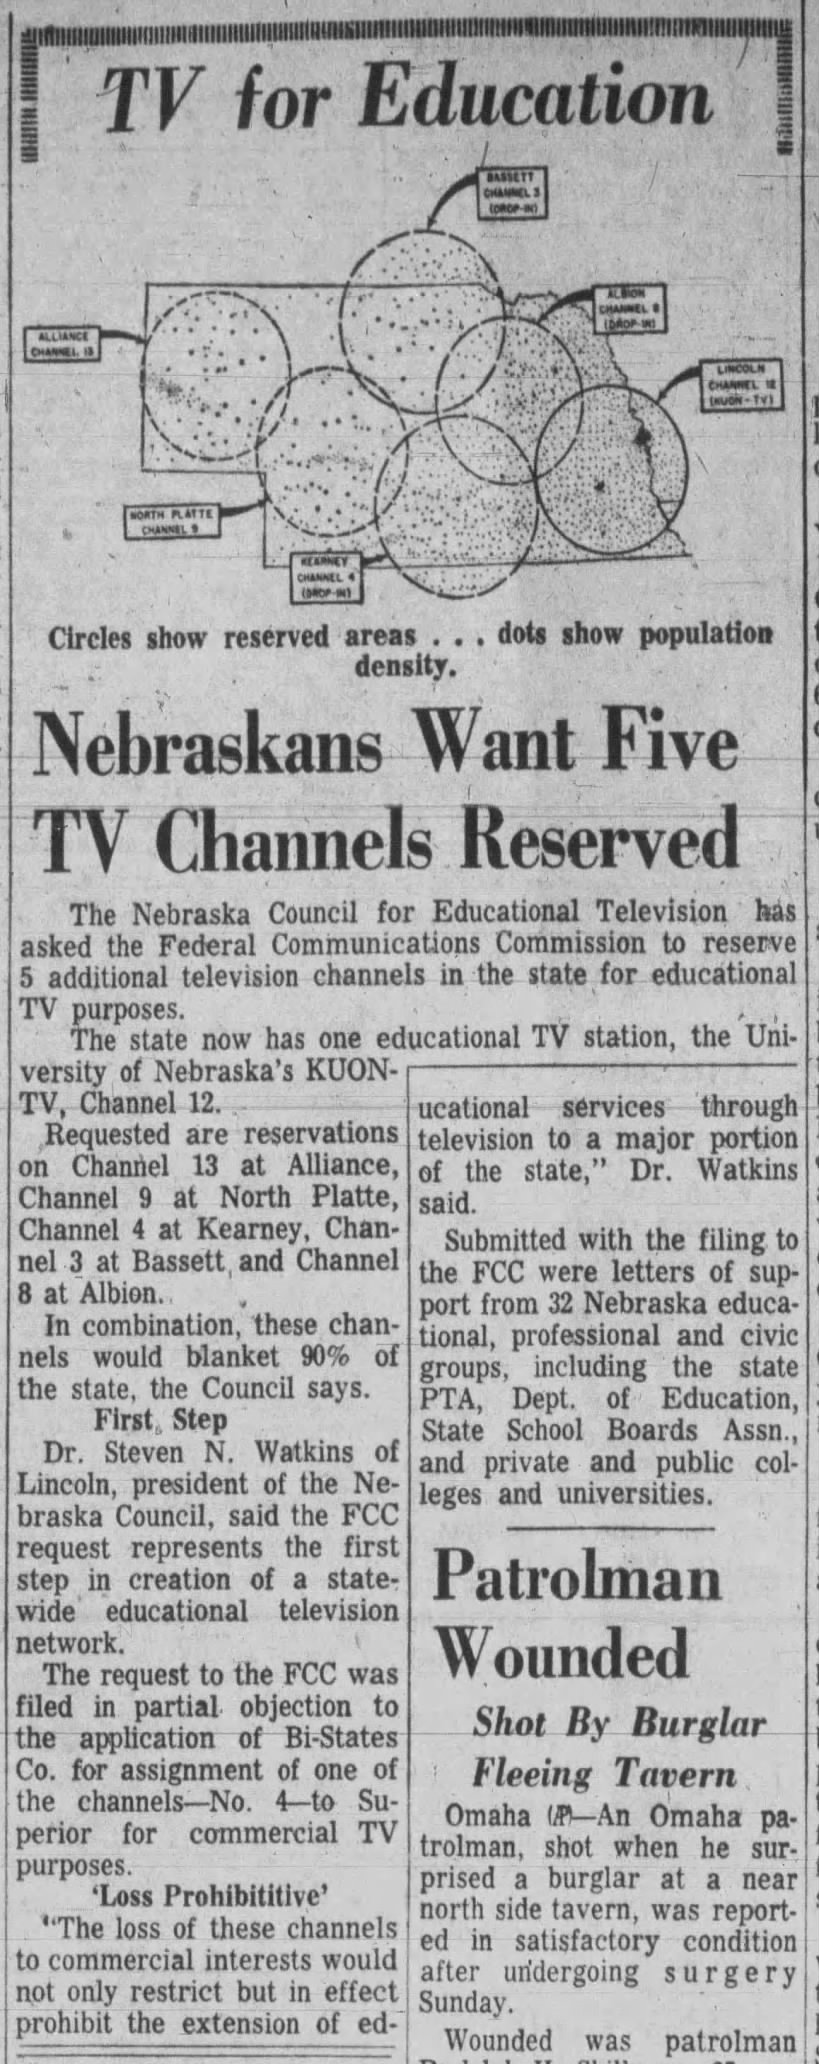 TV for Education: Nebraskans Want Five TV Channels Reserved